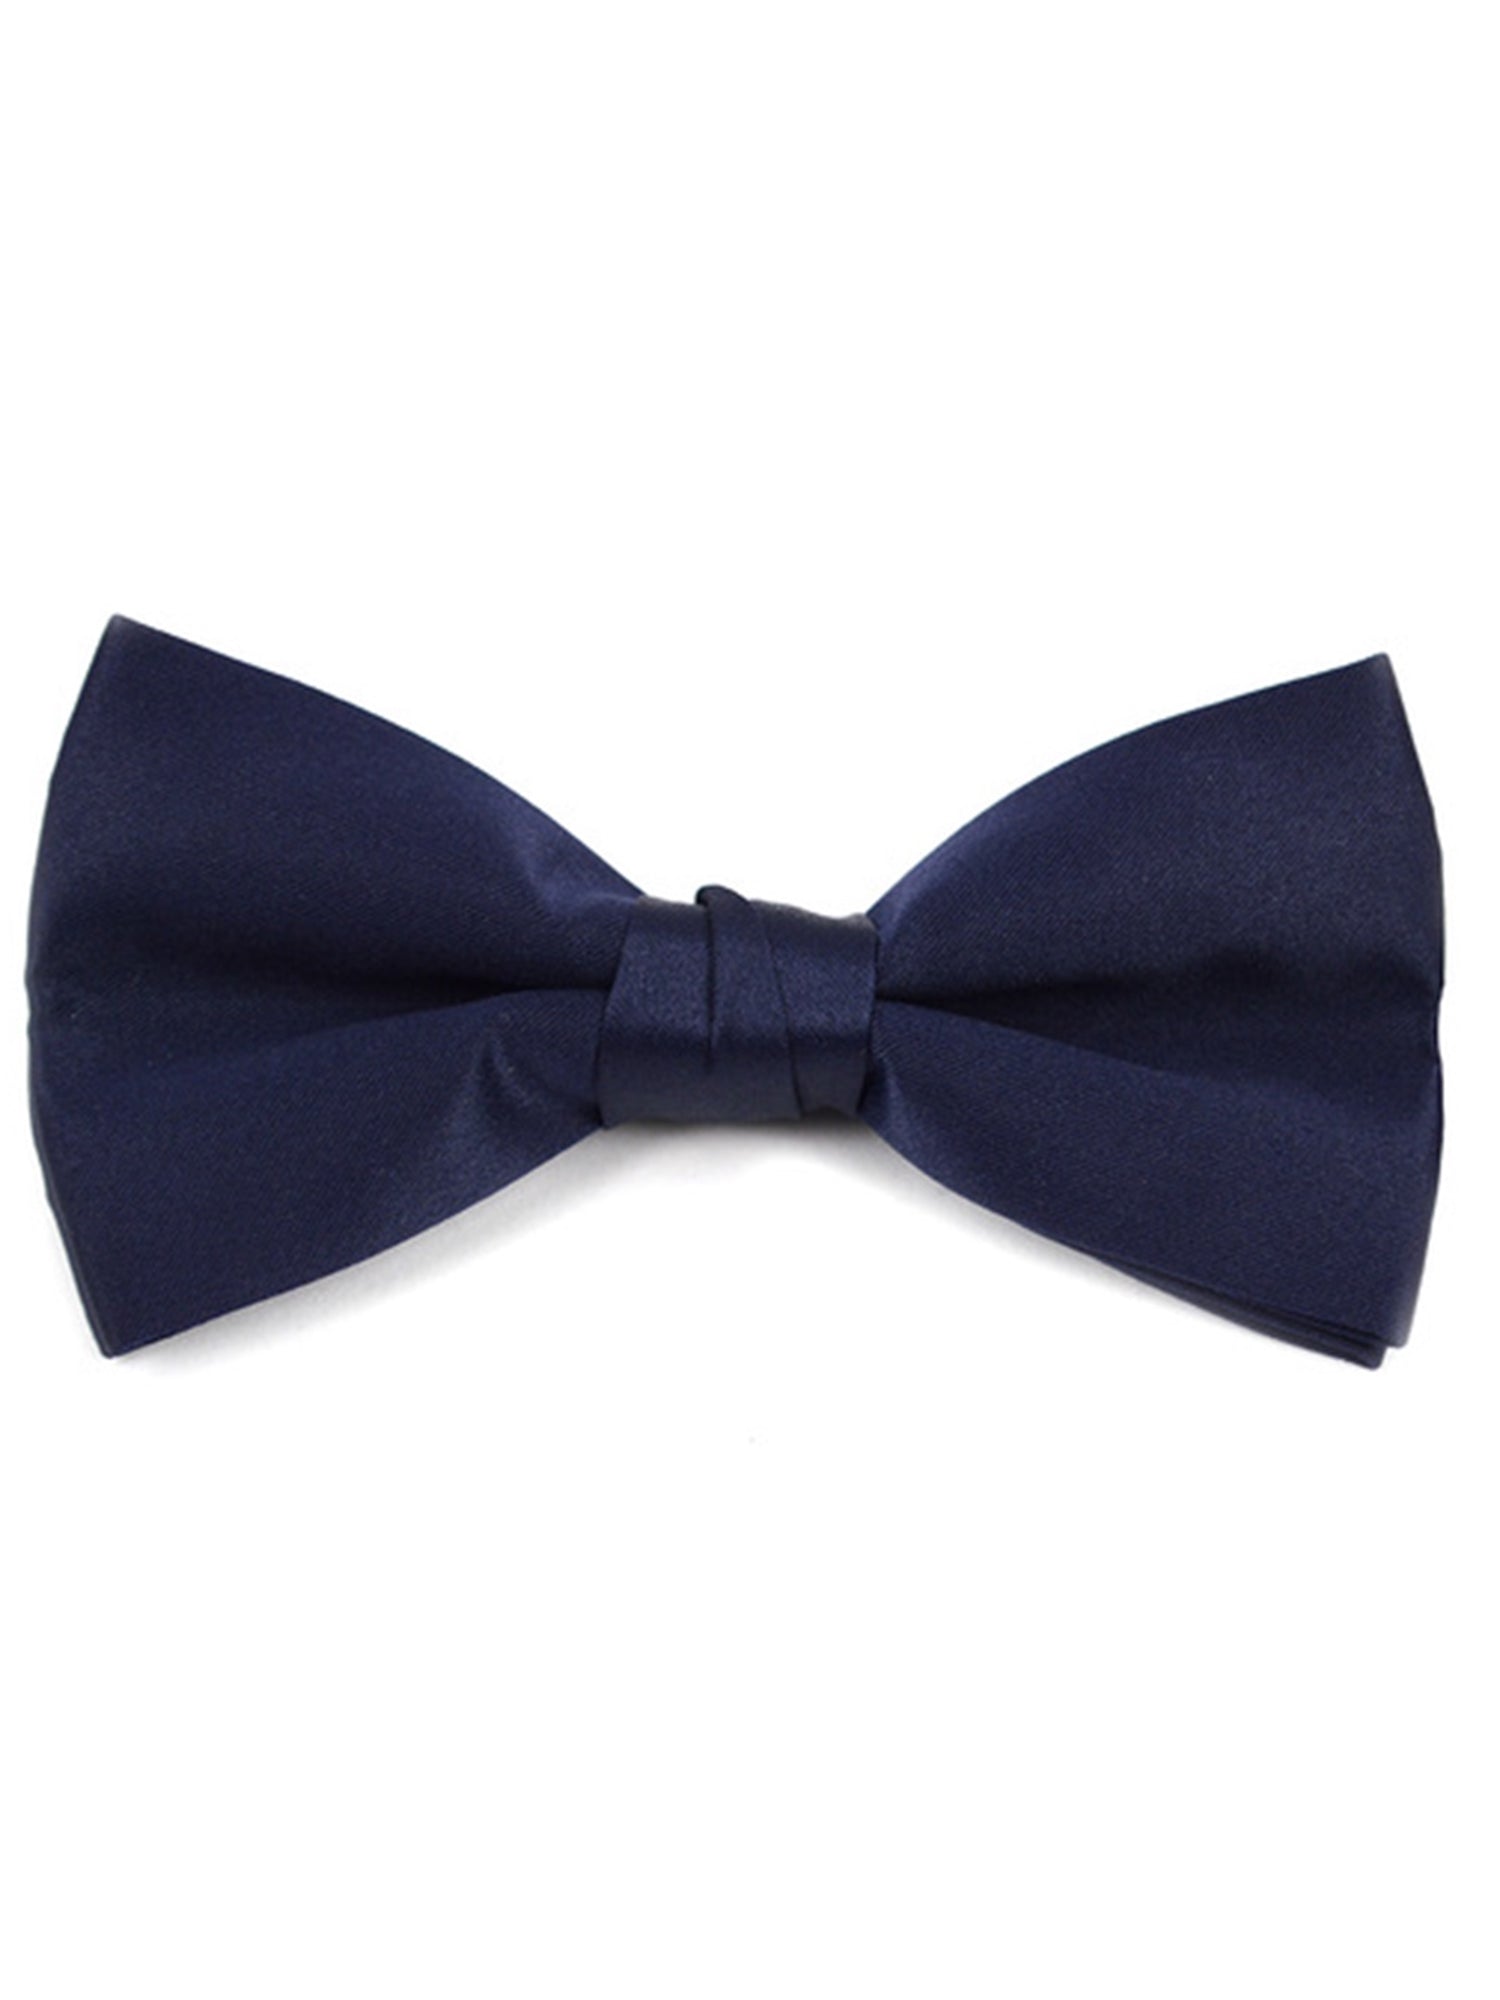 Men's Pre-tied Adjustable Length Bow Tie - Formal Tuxedo Solid Color Men's Solid Color Bow Tie TheDapperTie Navy One Size 